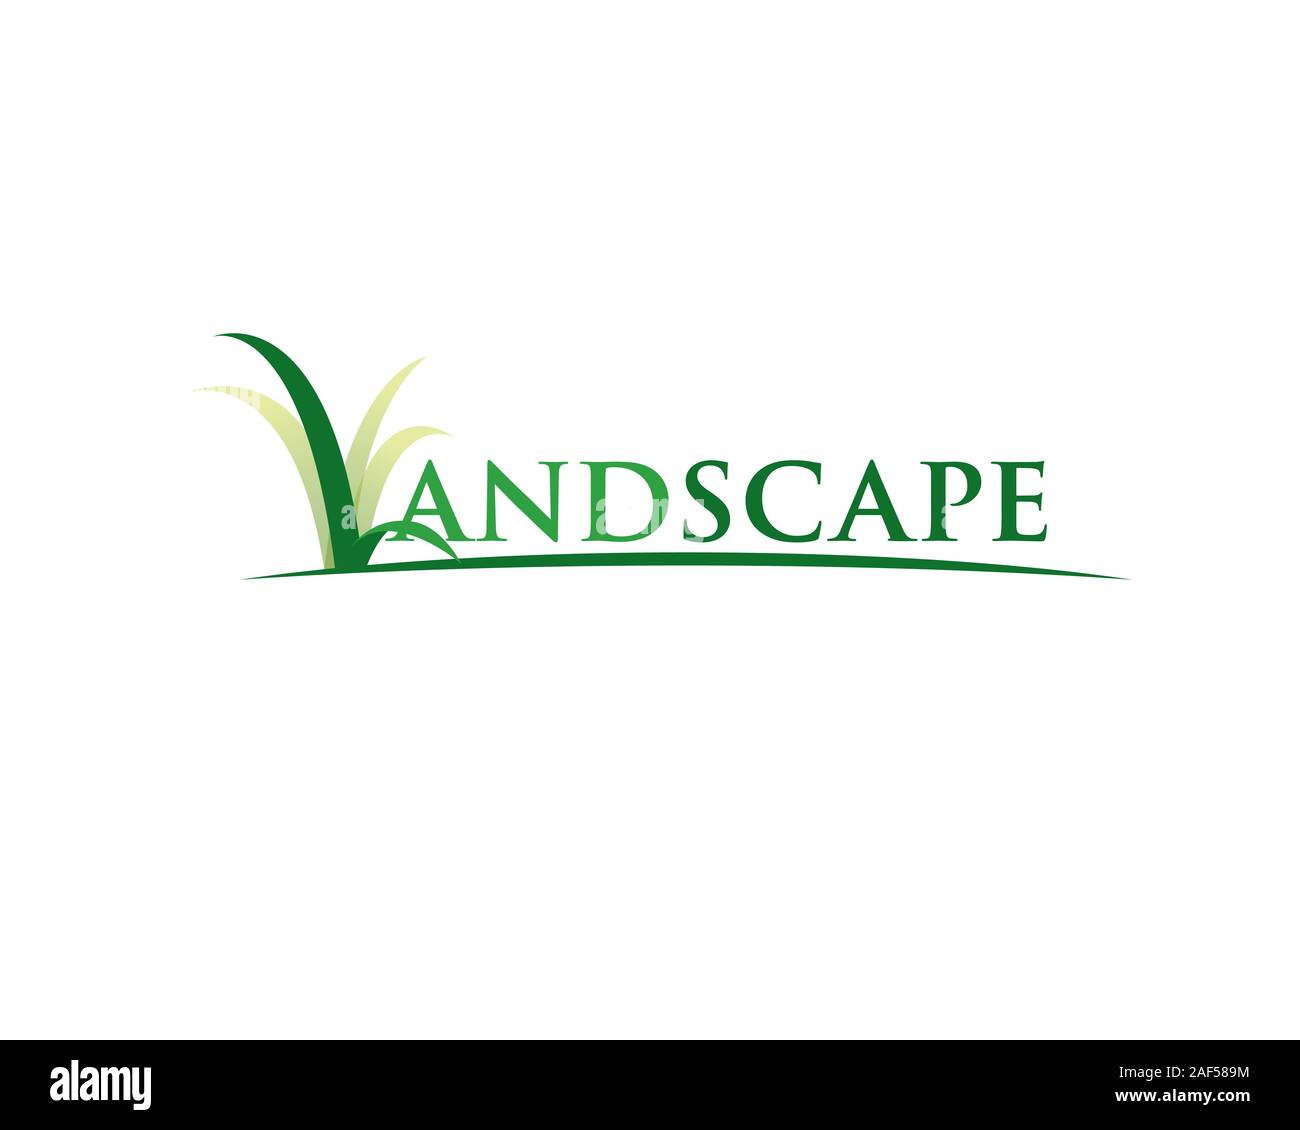 landscape wordmark from grass Stock Vector